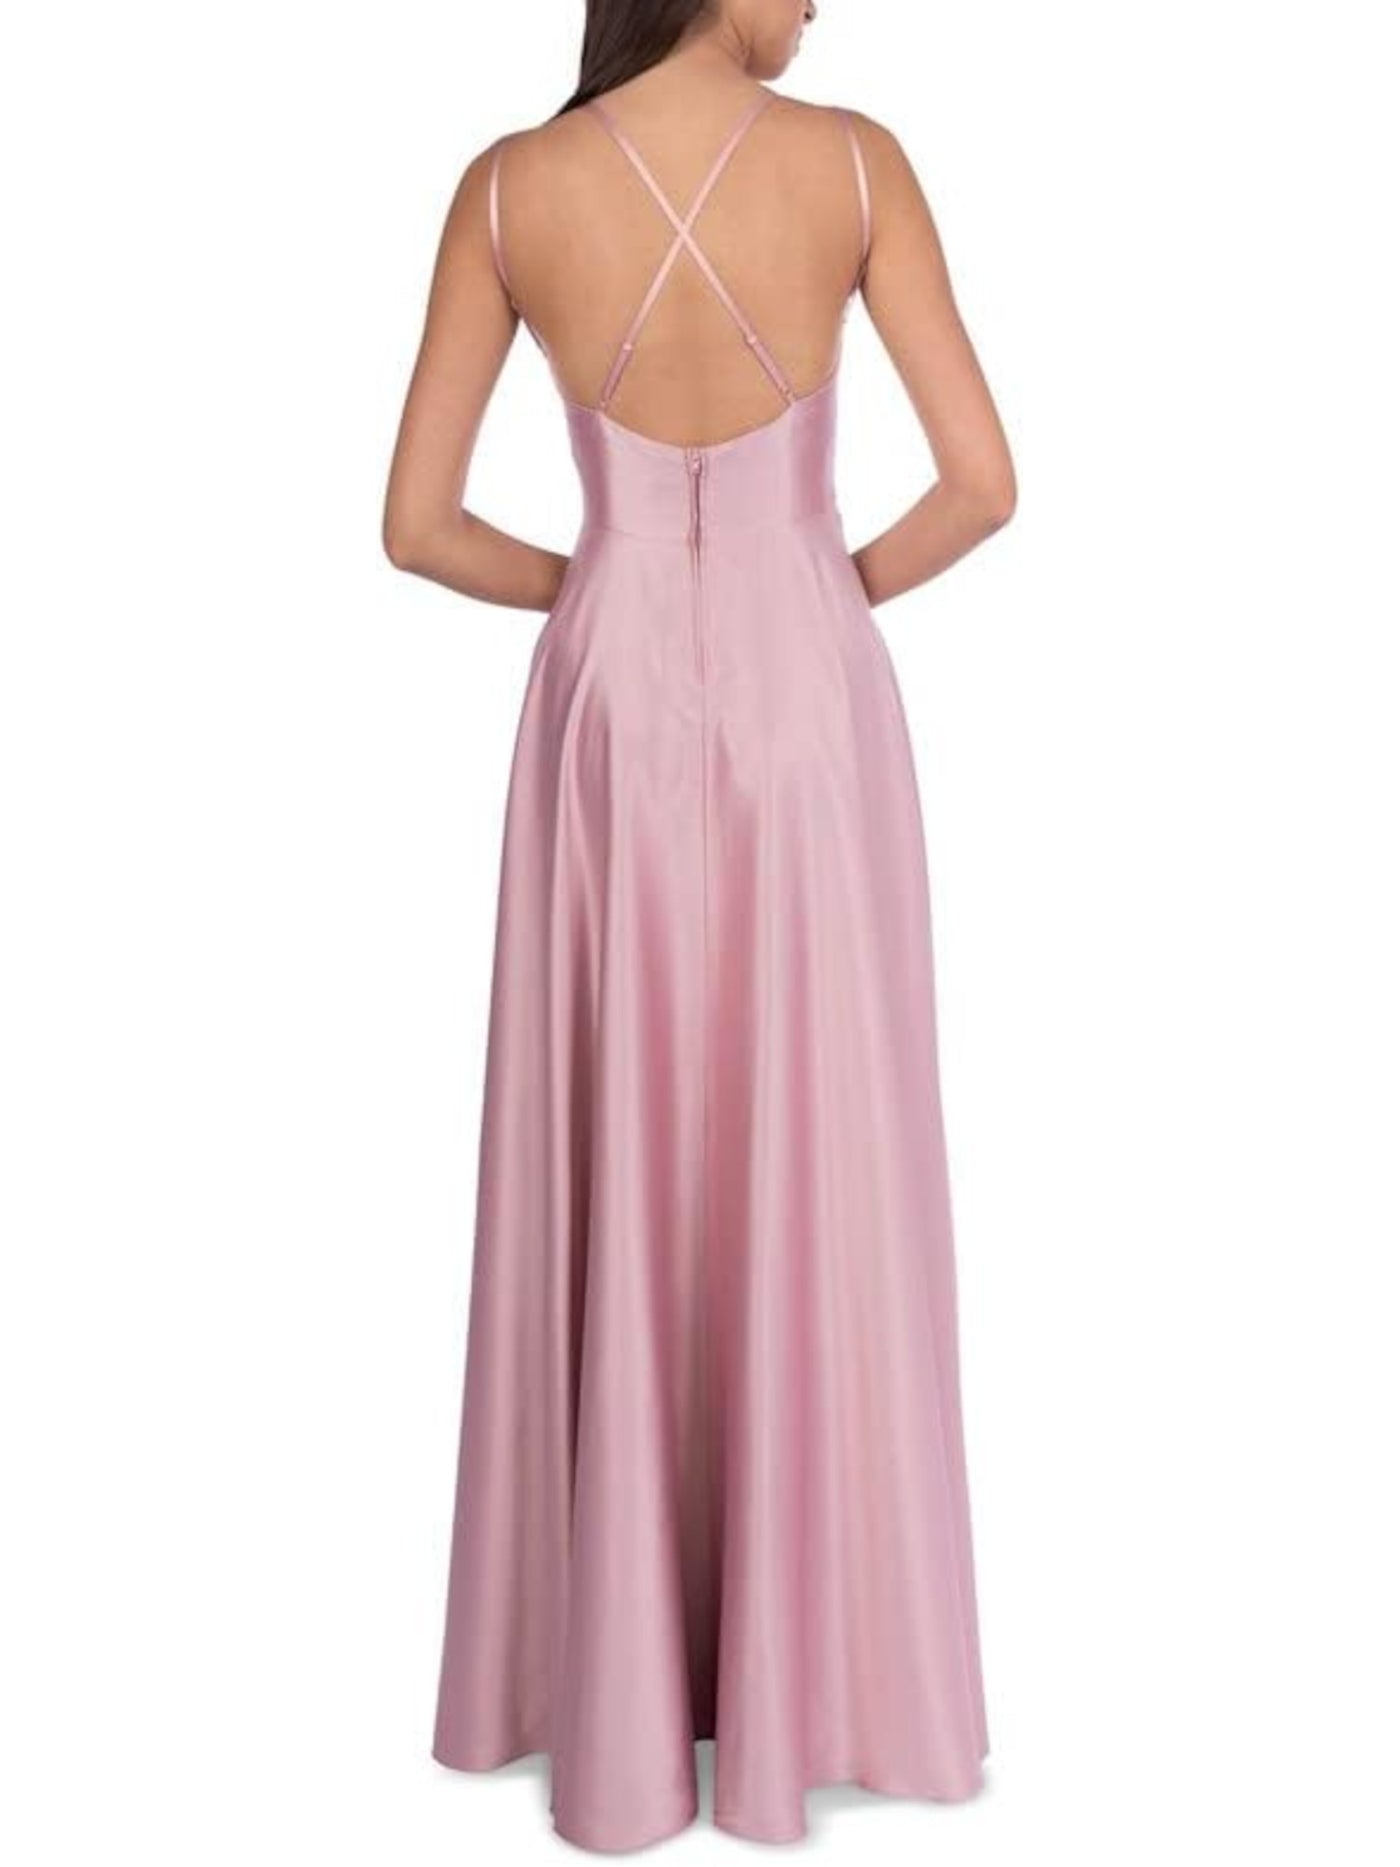 B DARLIN Womens Pink Satin Pocketed Zippered Open Back Thigh-high Slit Lined Sleeveless V Neck Full-Length Formal Fit + Flare Dress Juniors 7\8